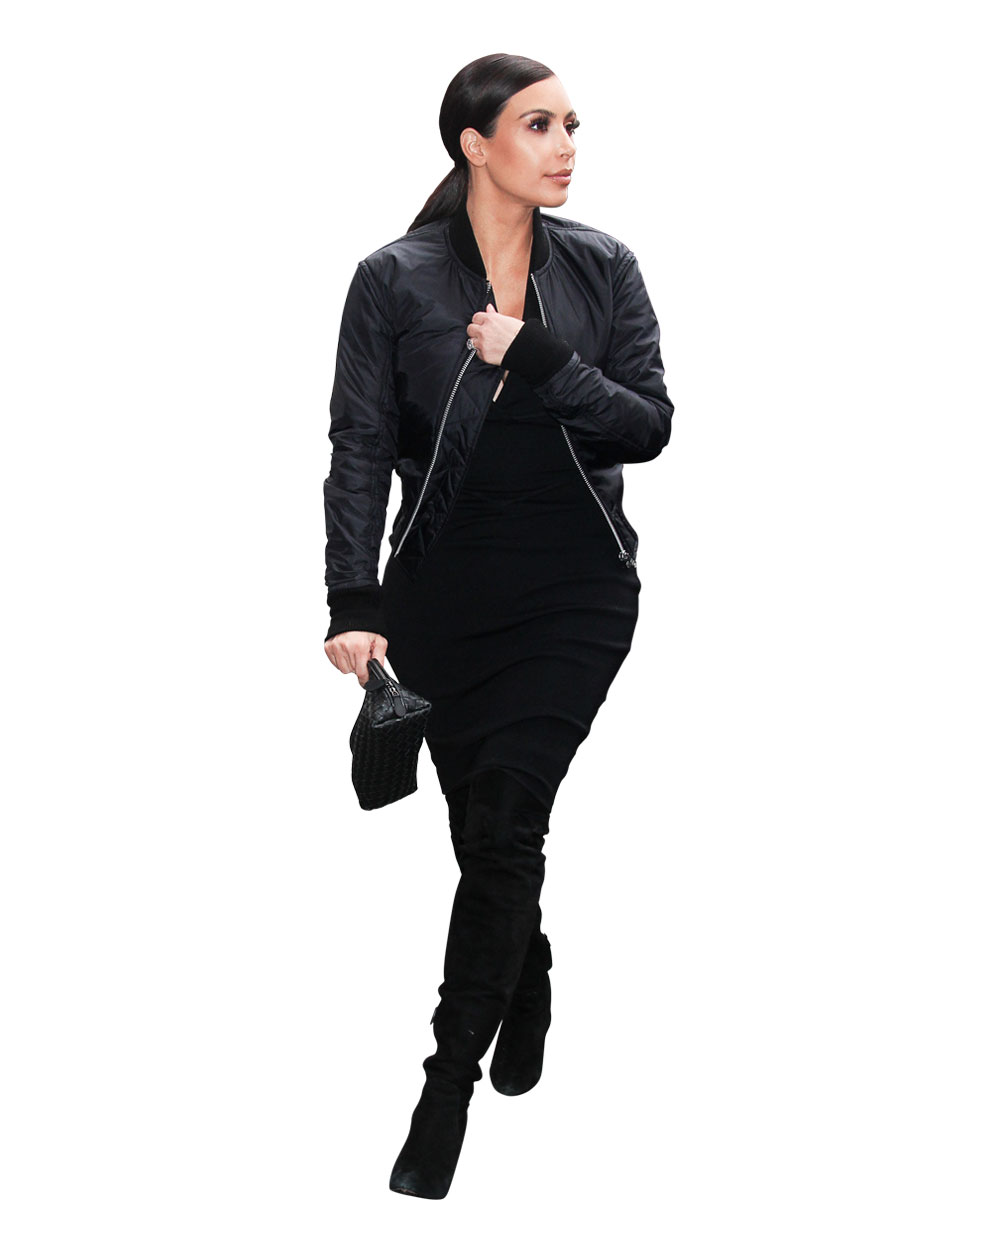 Kim Kardashian West - Bomber jackets